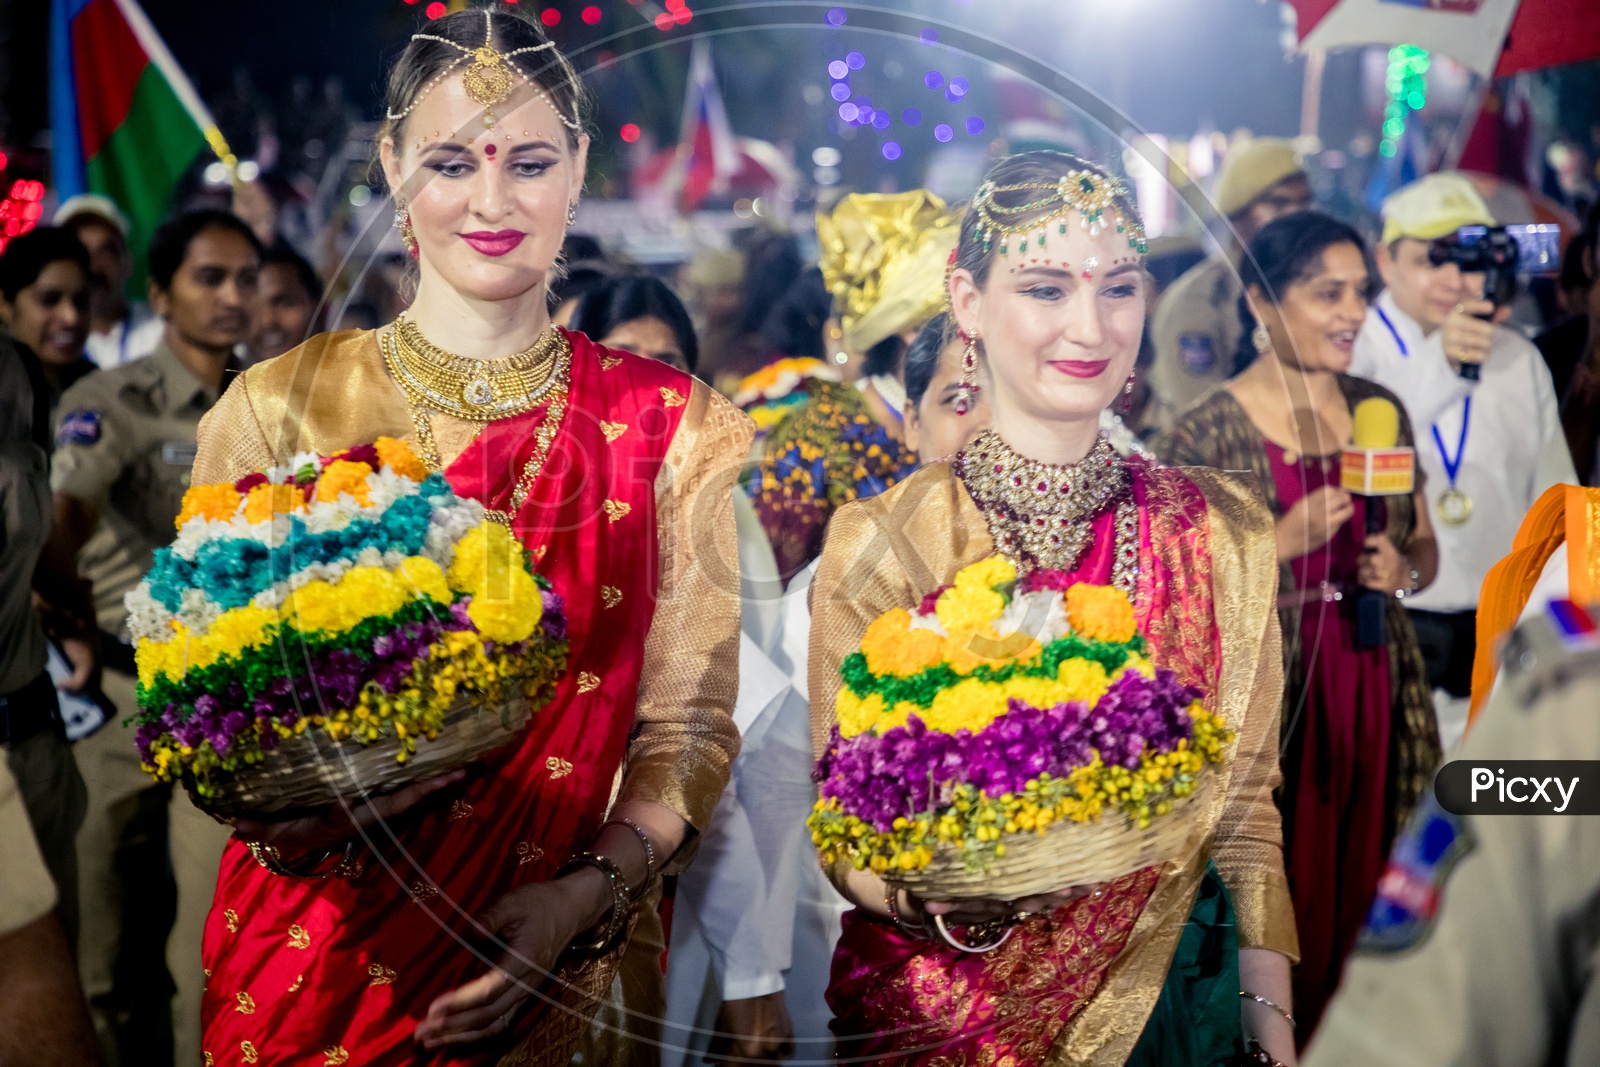 Foreigners clad in traditional attire danced around Bathukammas in Hyderbad